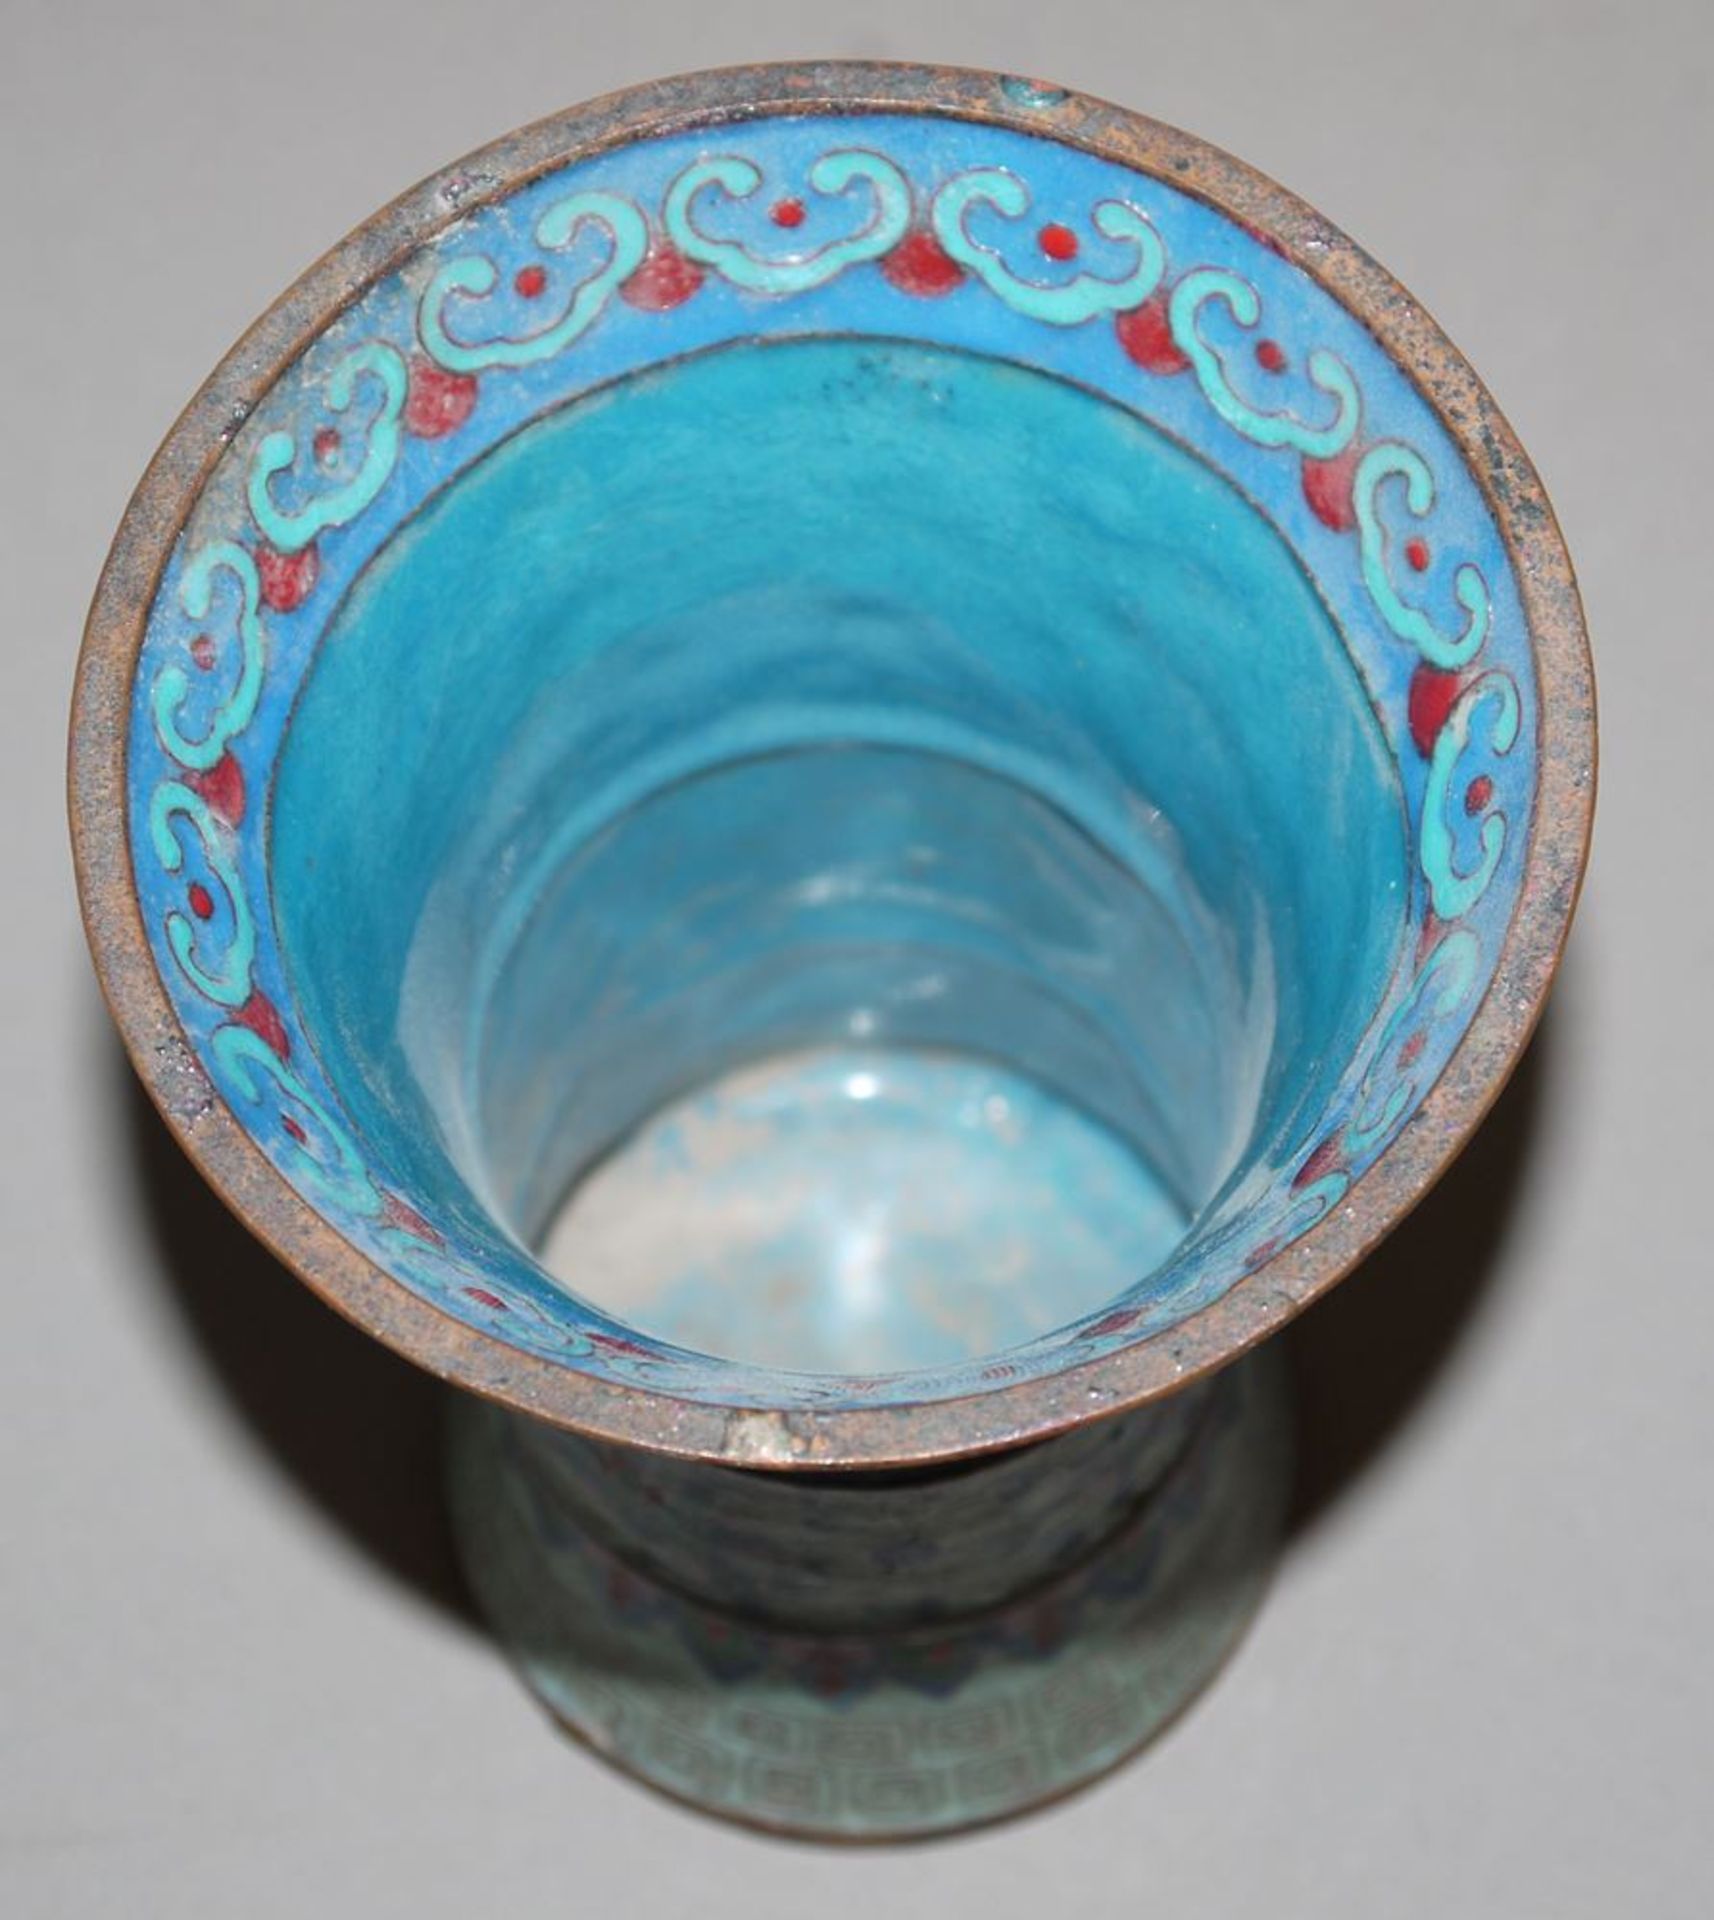 Cloisonné-Vase in Gu-Form, späte Qing-Zeit, China 19. Jh. - Image 3 of 3